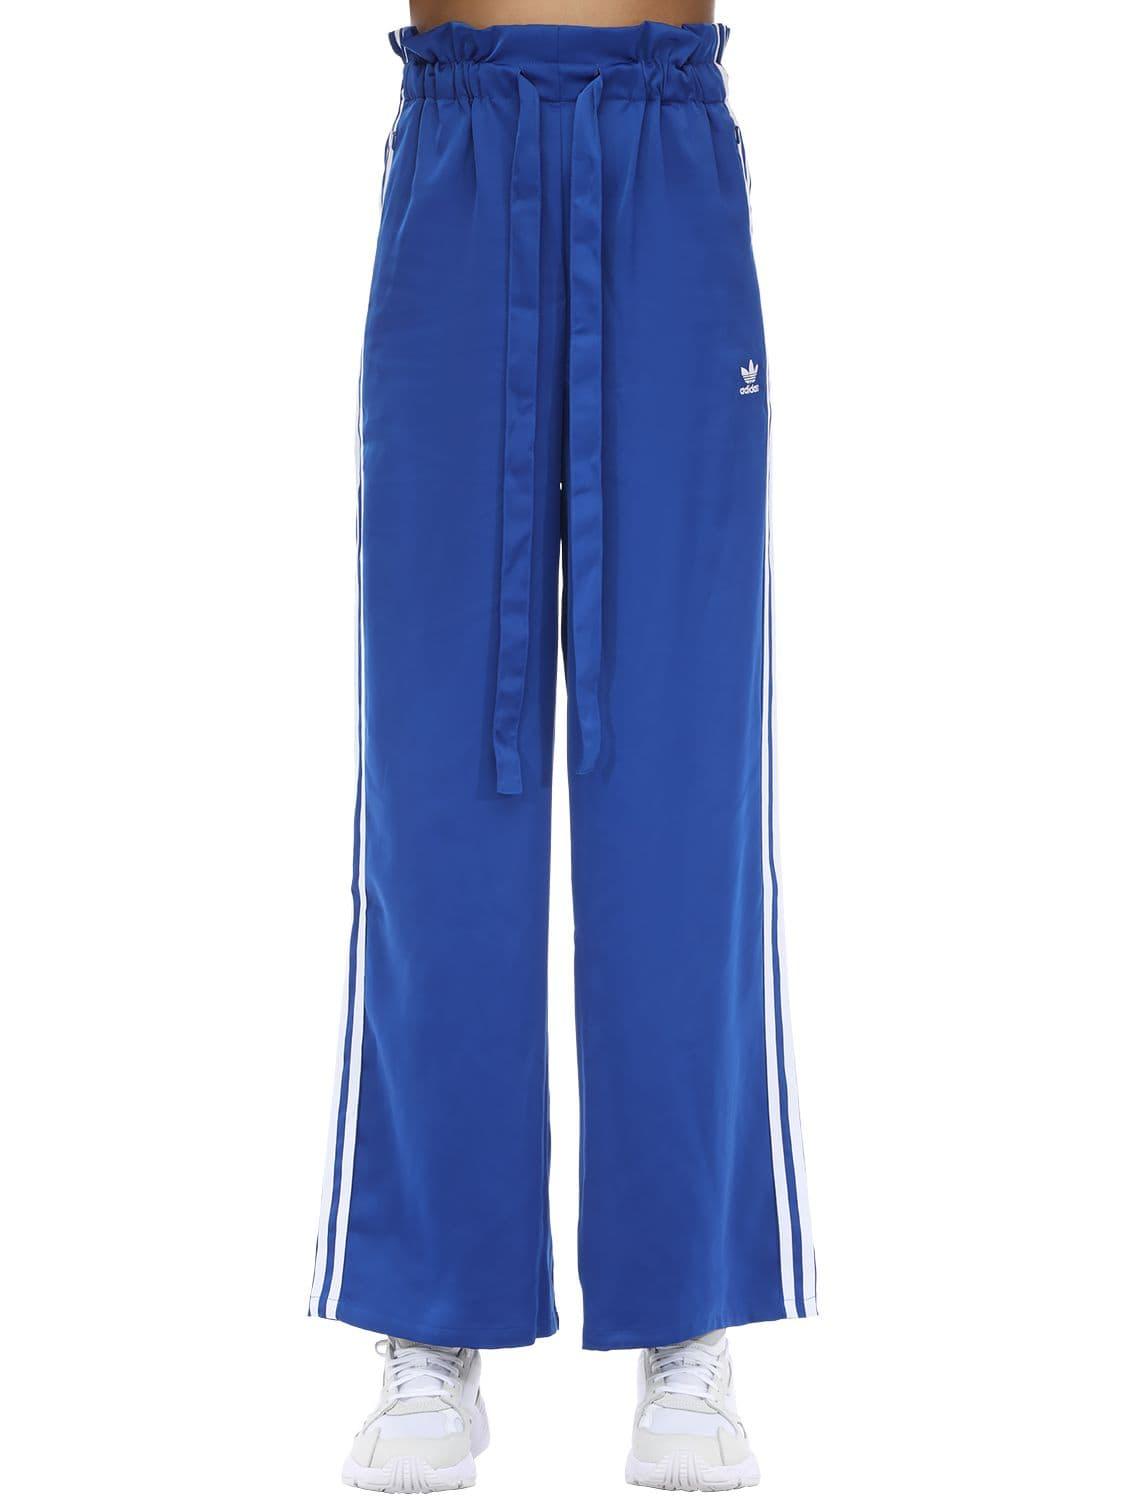 adidas Originals High Waist Satin Jersey Track Pants in Blue | Lyst Canada